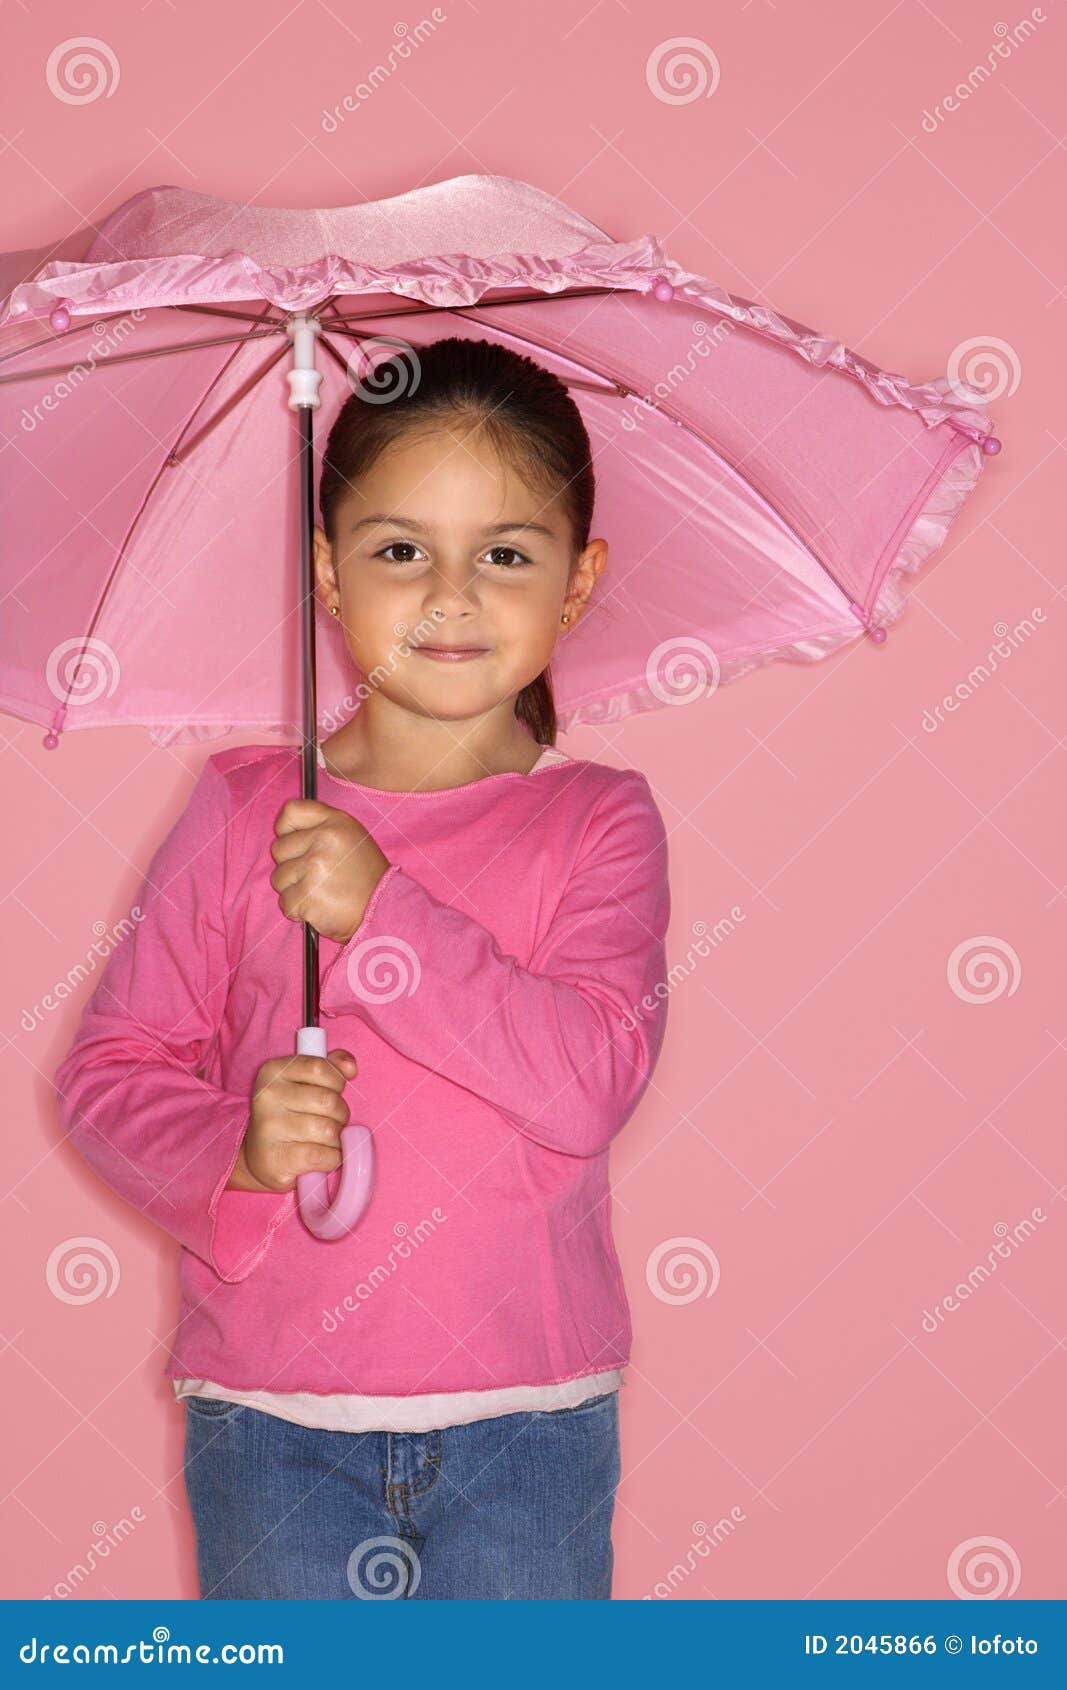 Female Girl With Umbrella. Royalty Free Stock Image  Image: 2045866